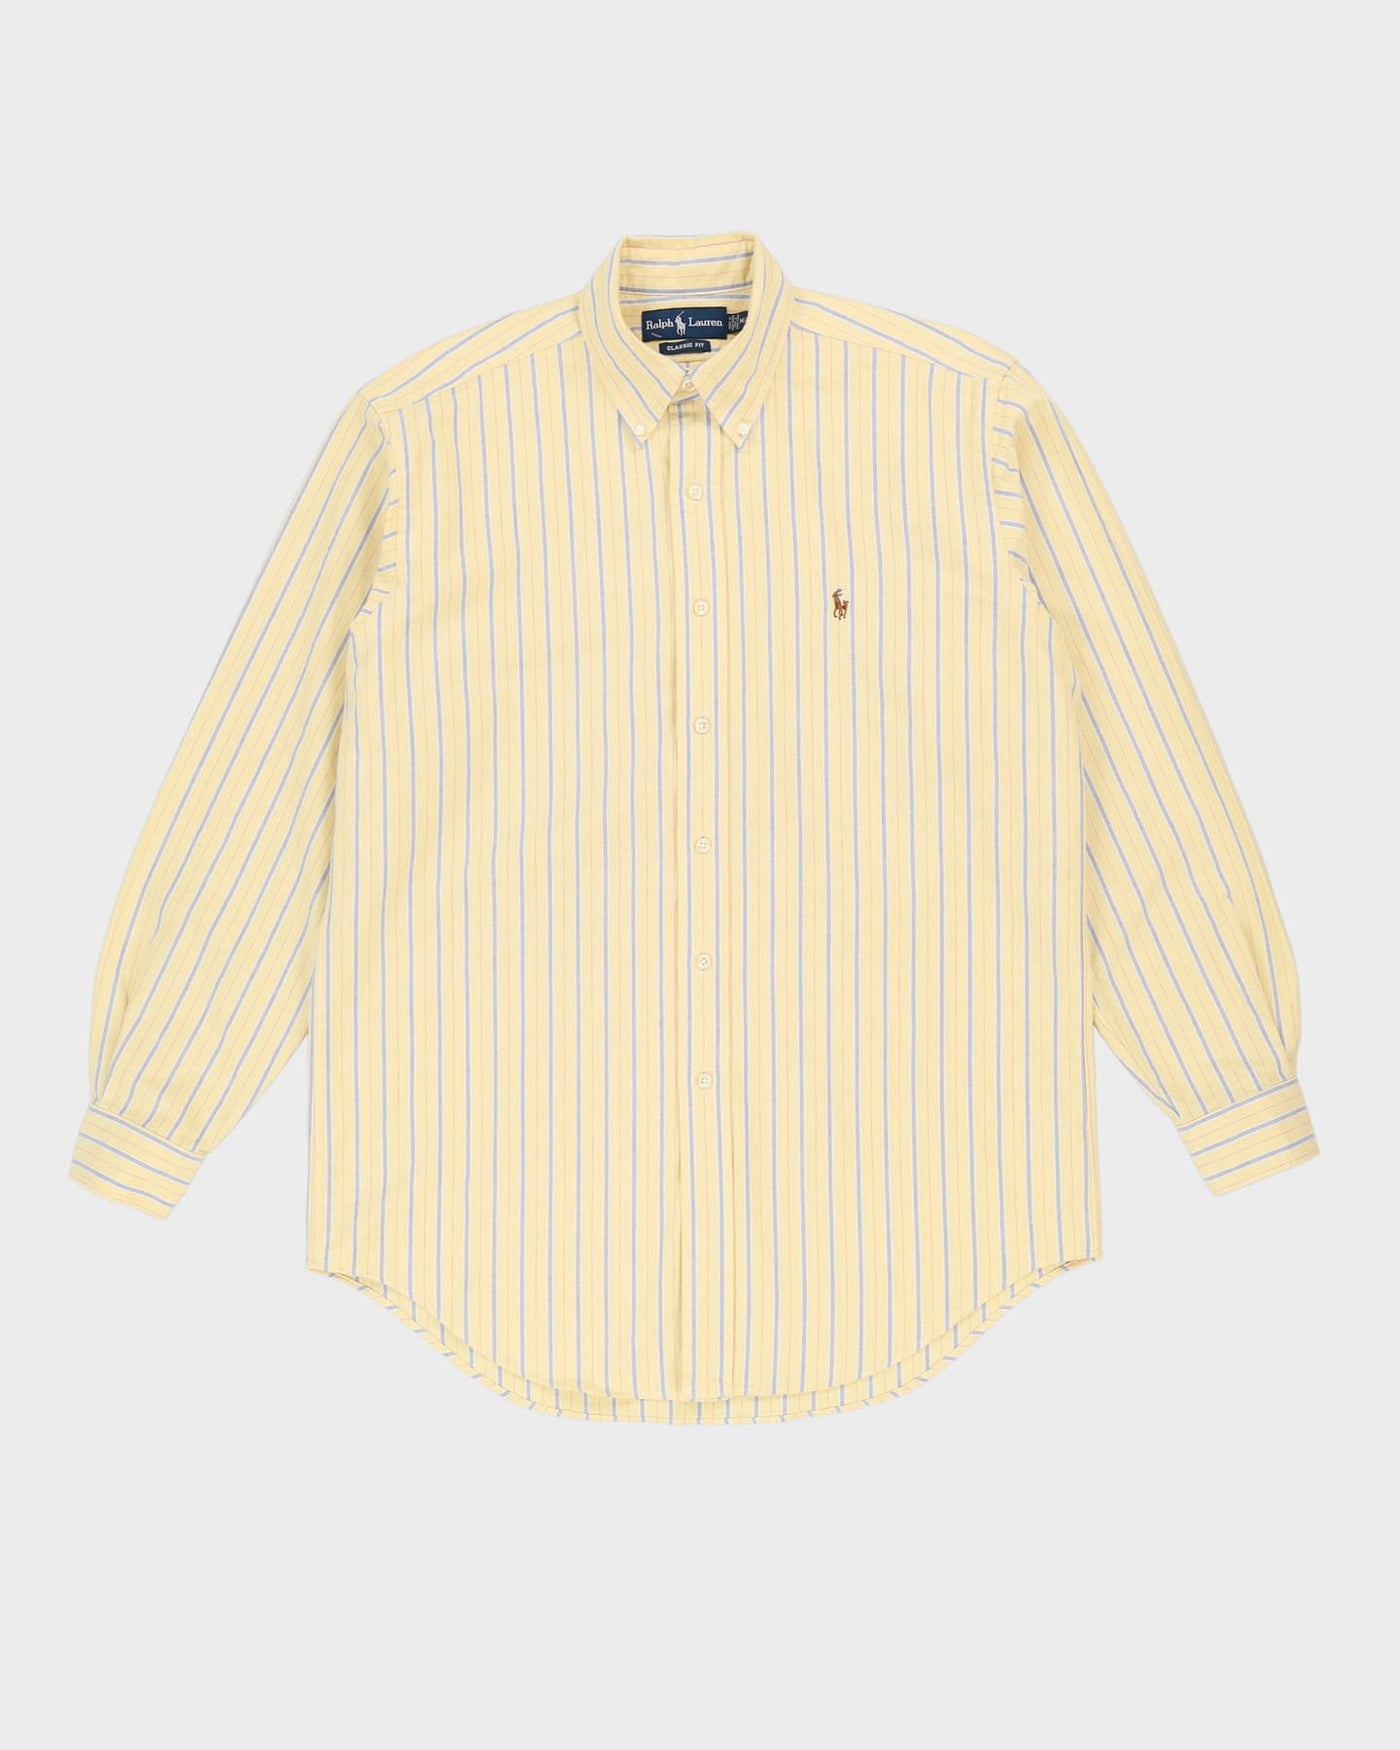 Vintage 90s Ralph Lauren Yellow Striped Long-Sleeve Oversized Shirt - M